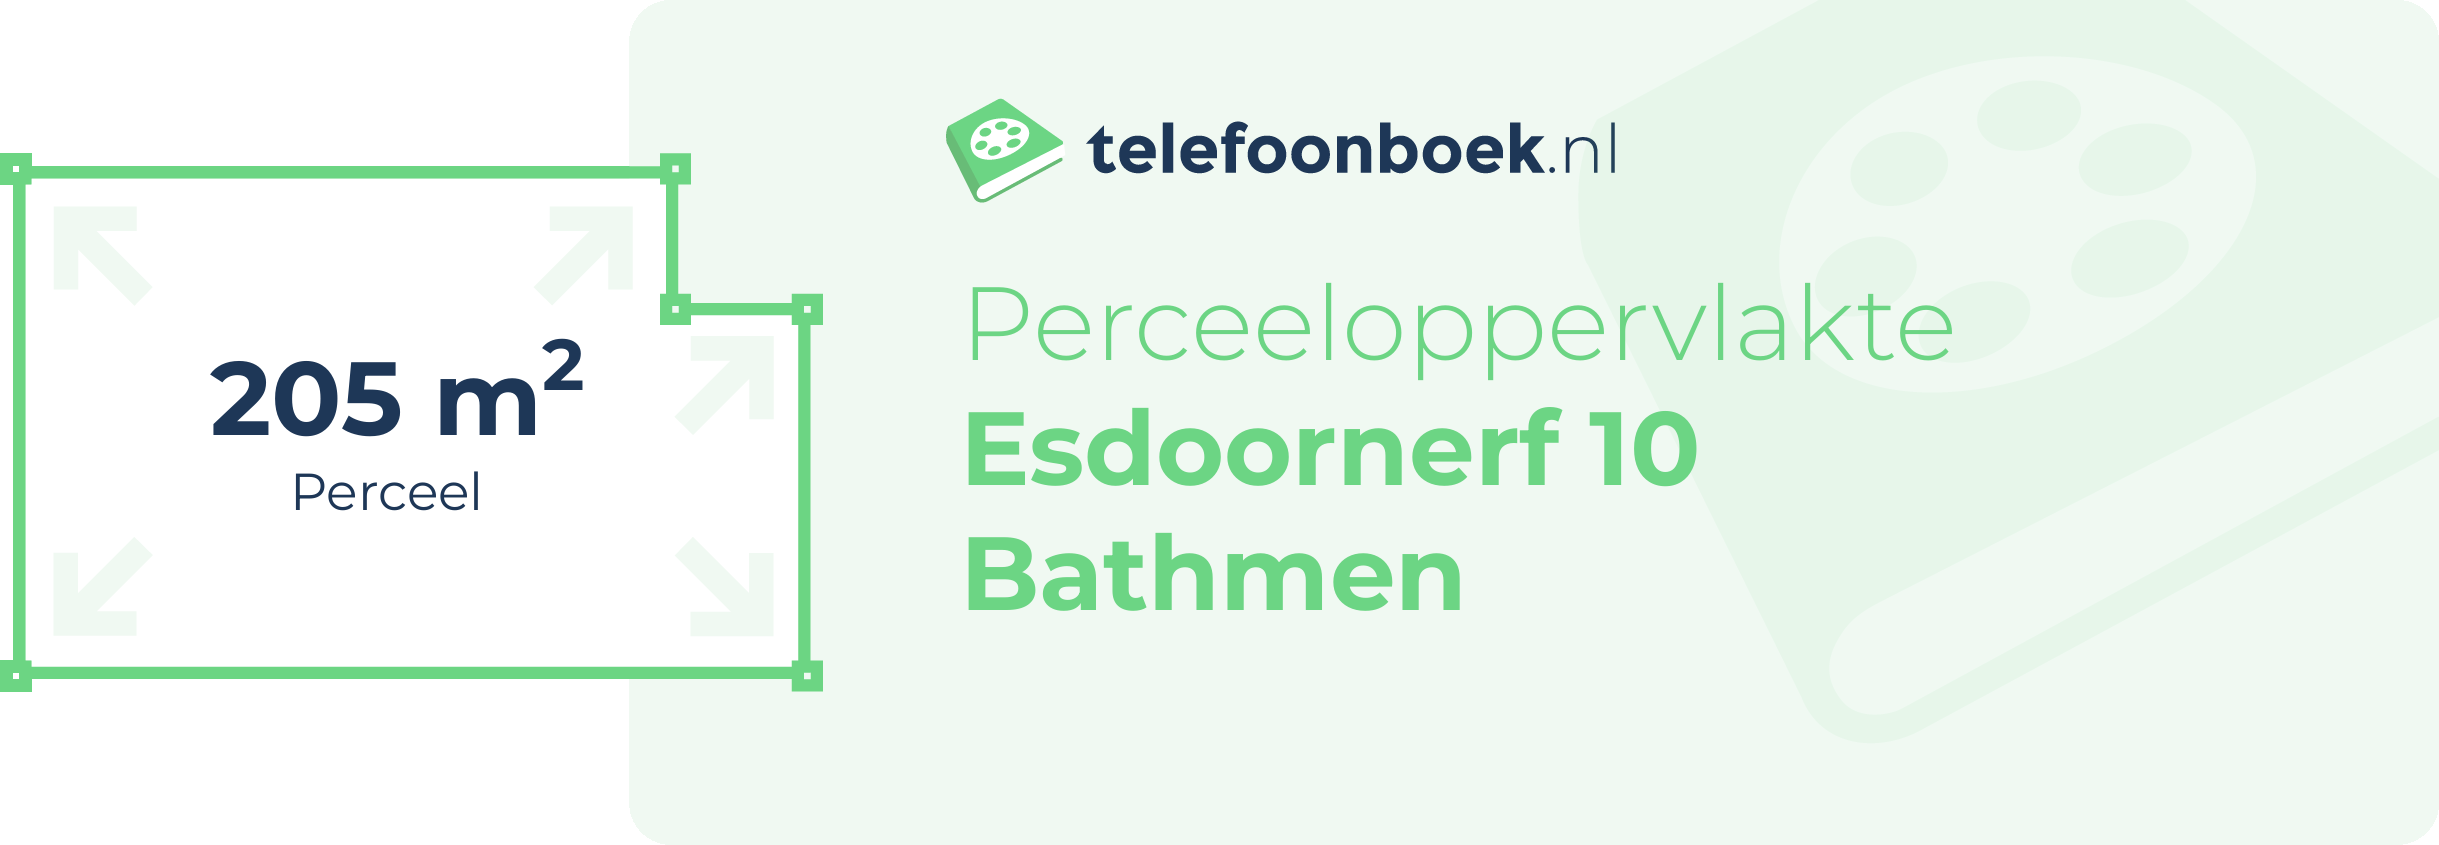 Perceeloppervlakte Esdoornerf 10 Bathmen